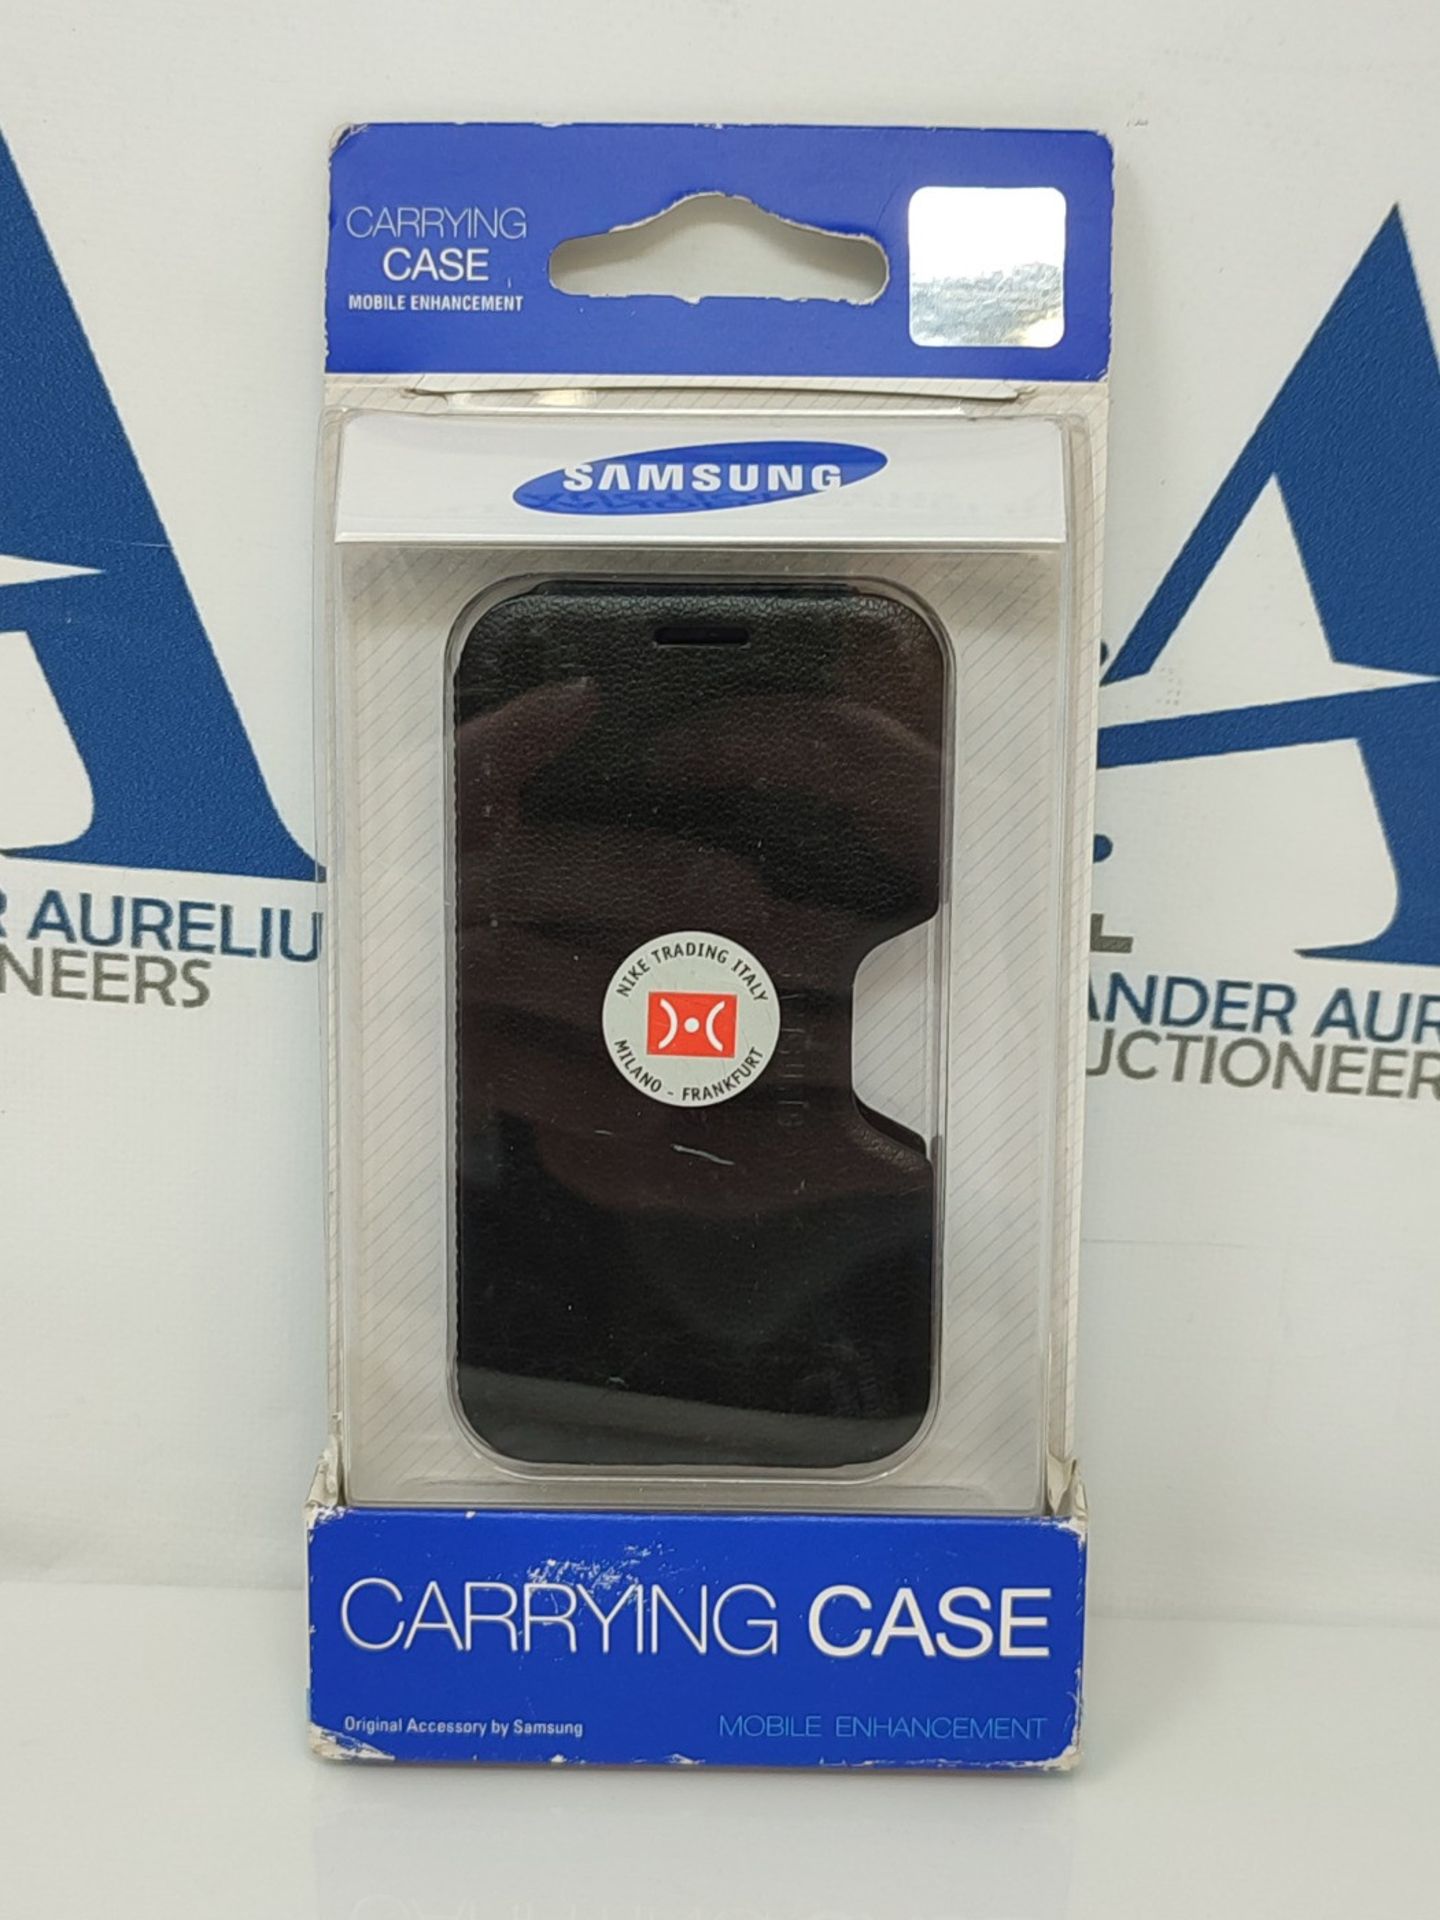 Samsung SAFUN01 - Leather case for Samsung mobile phones, black color - Image 2 of 3